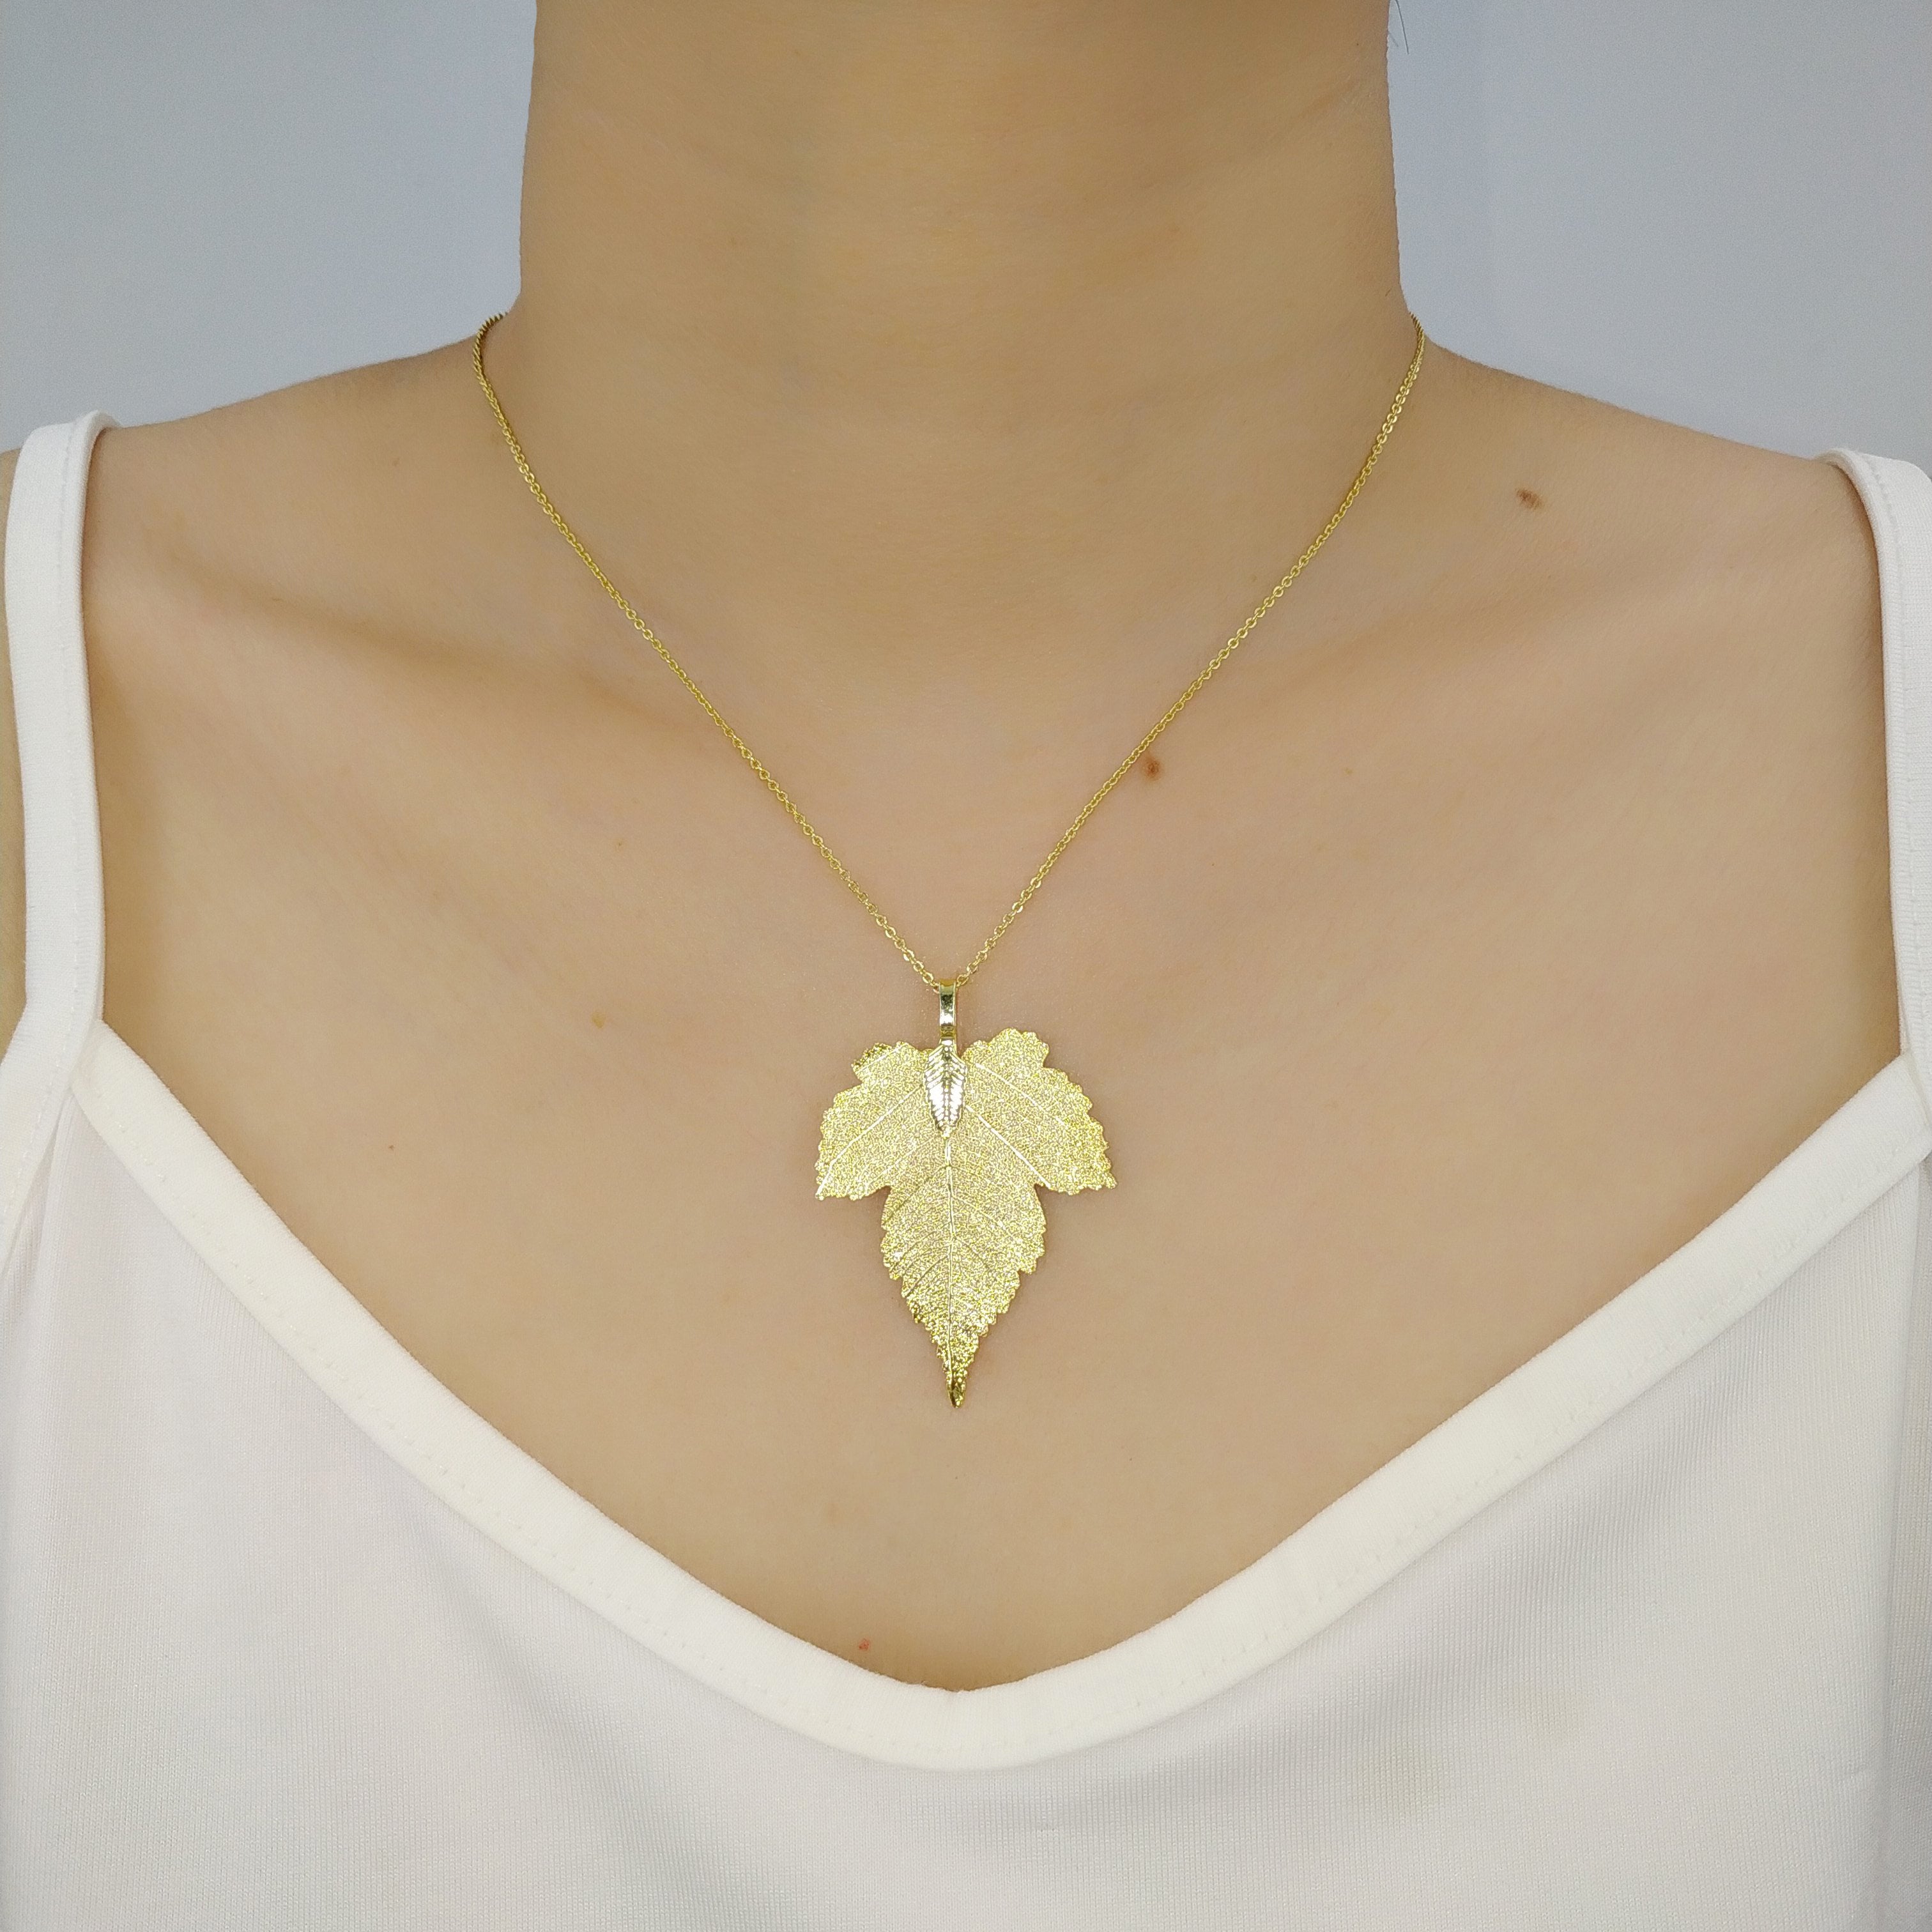 Maple Leaf - Real Leaf Pendant Necklace